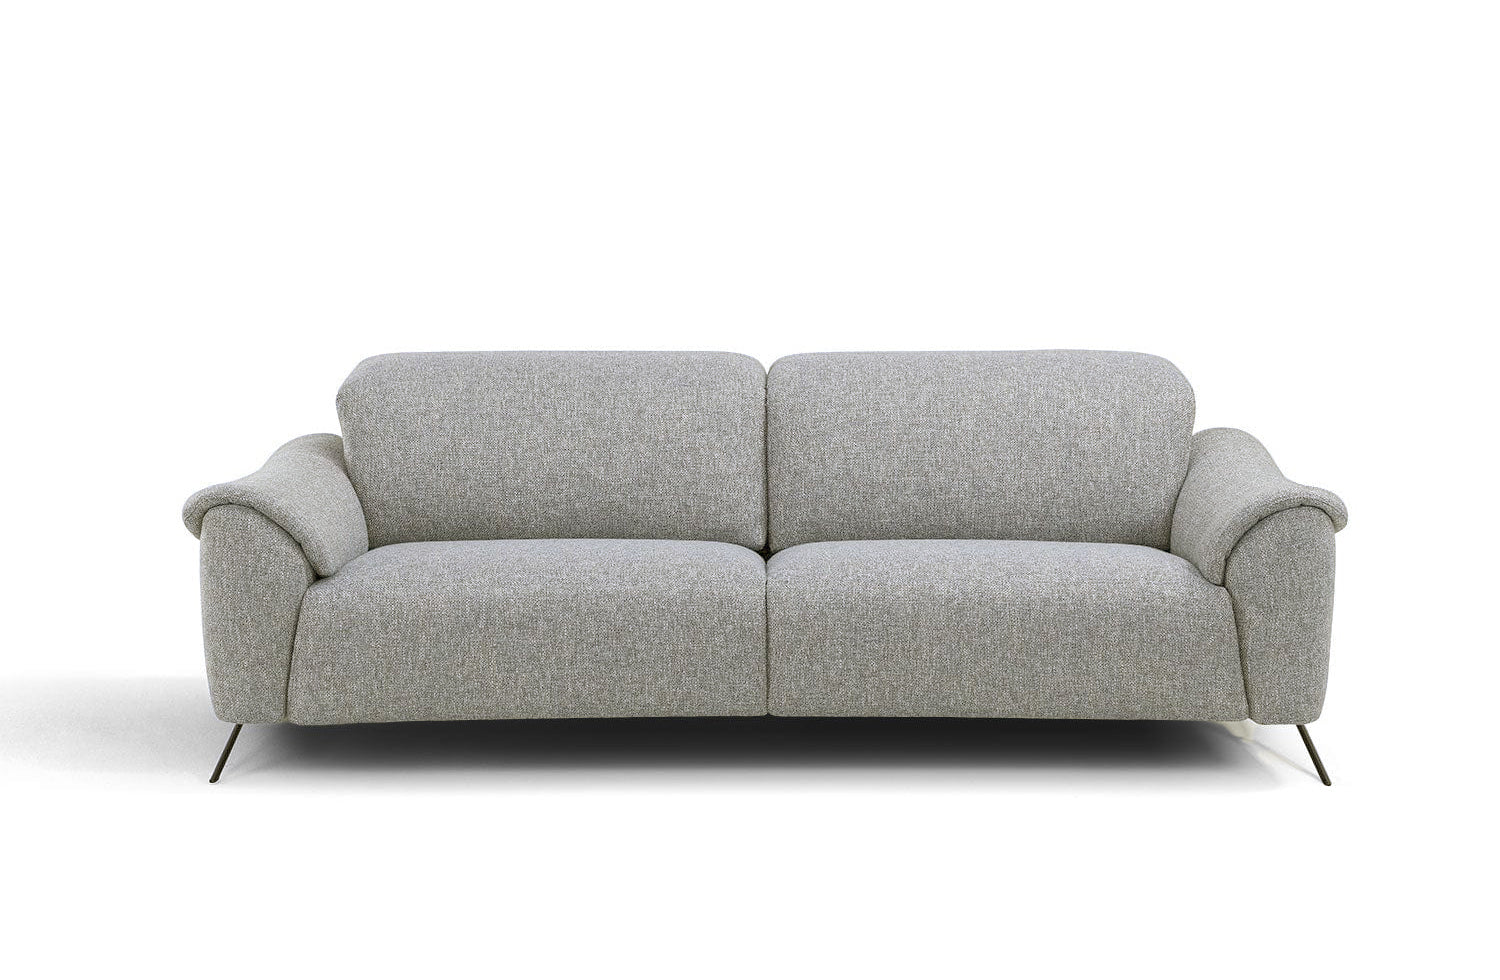 Dandy i884 Reclining Sofa | Incanto